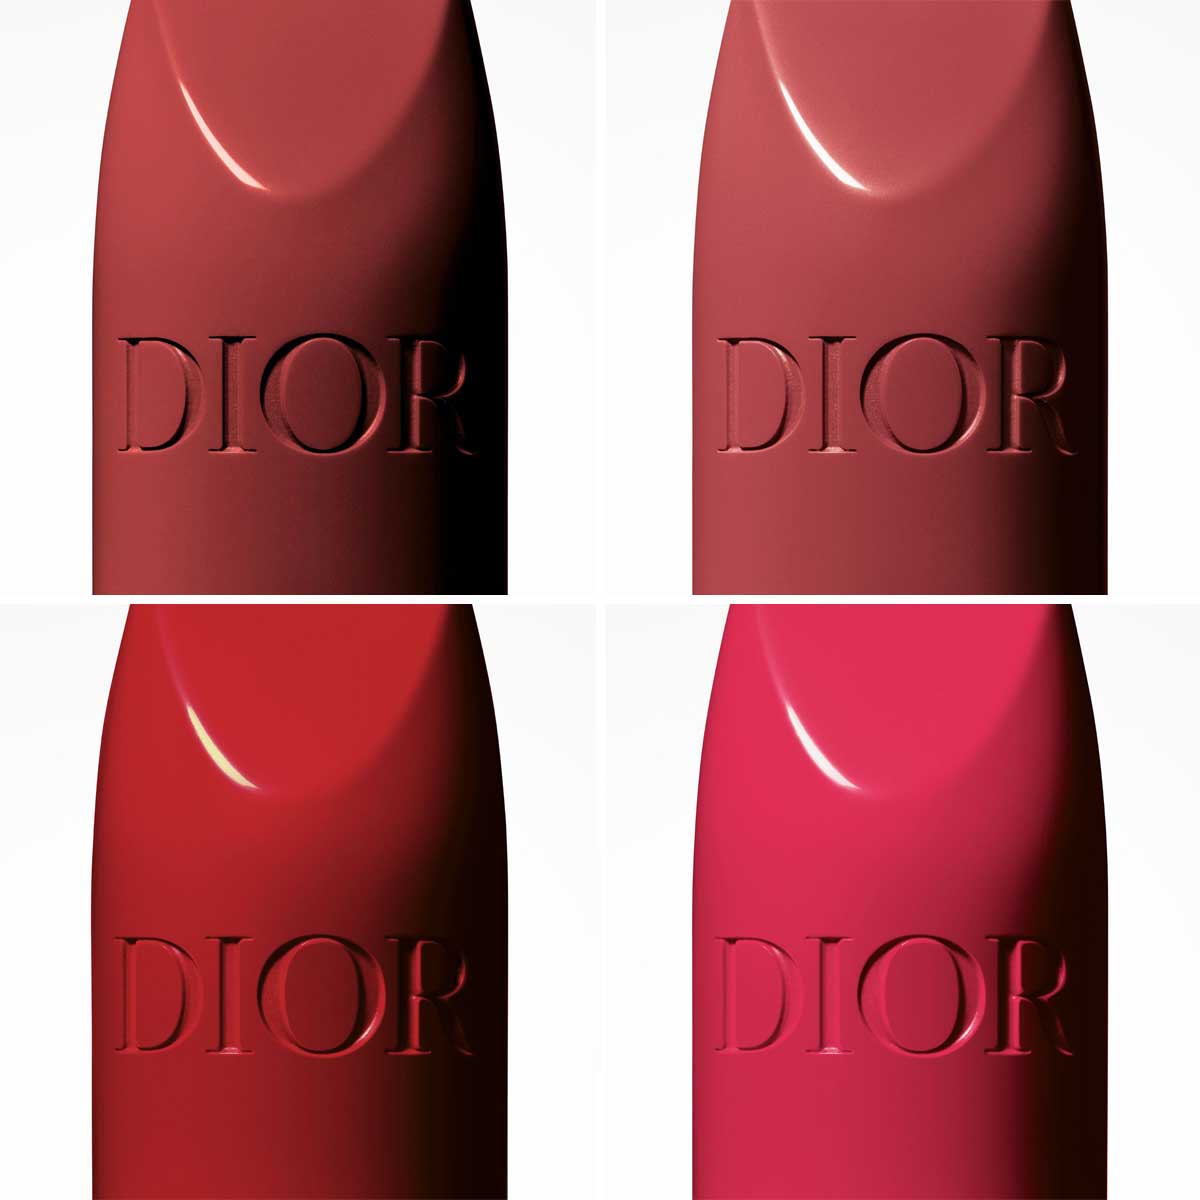 Dior Rouge satin lipstick